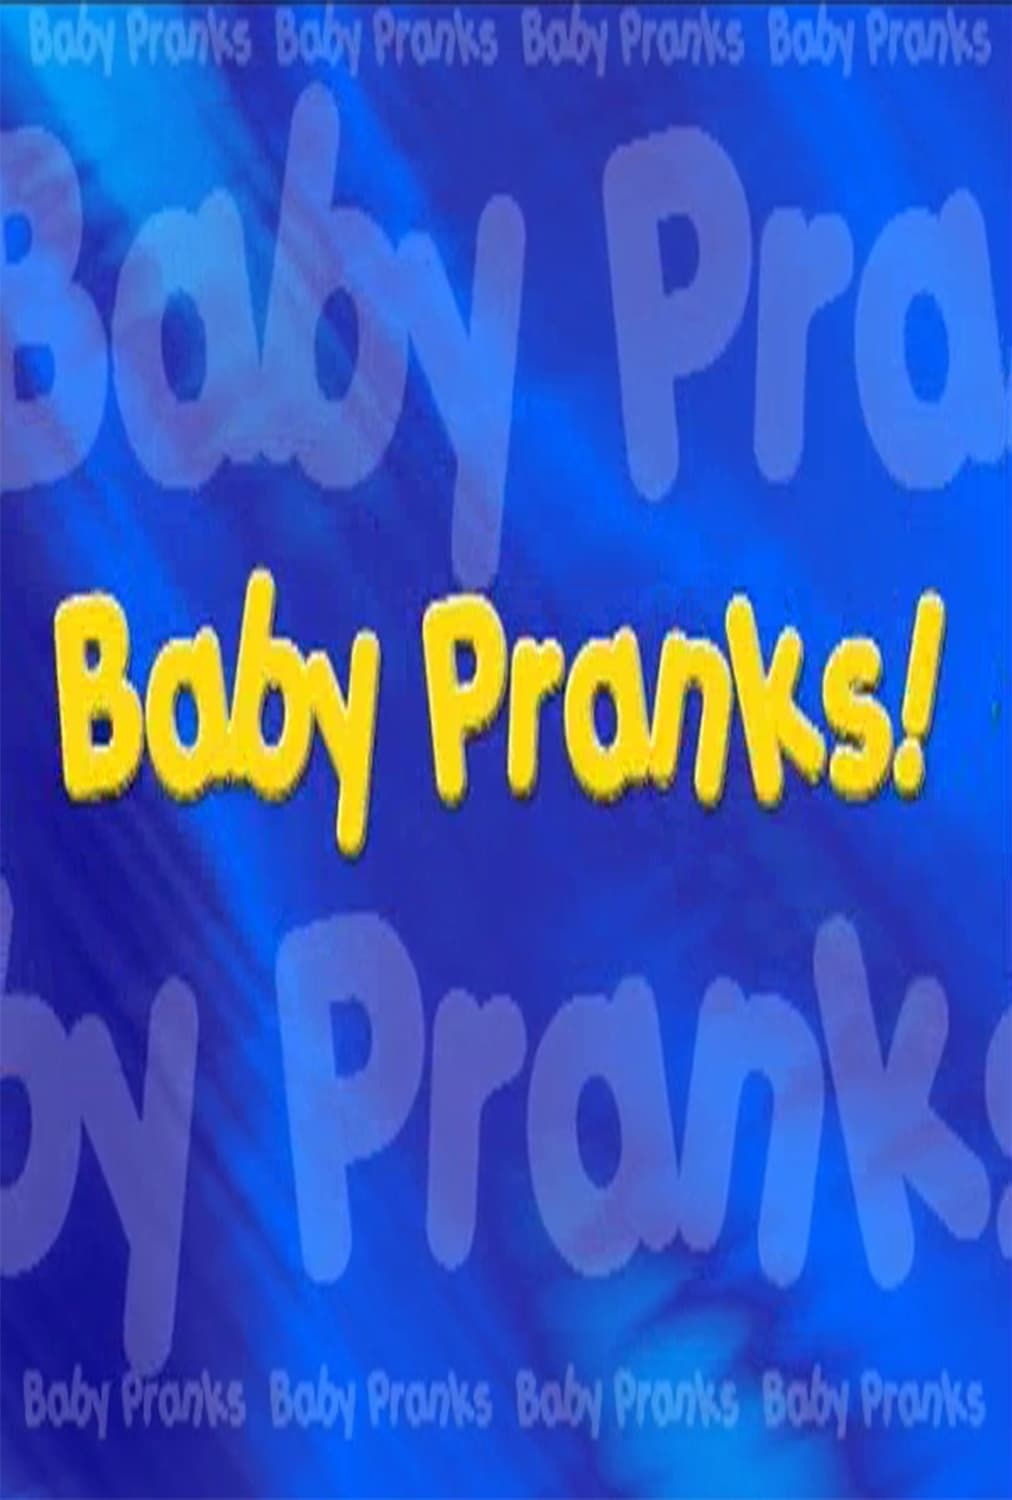 Baby Pranks (2004)